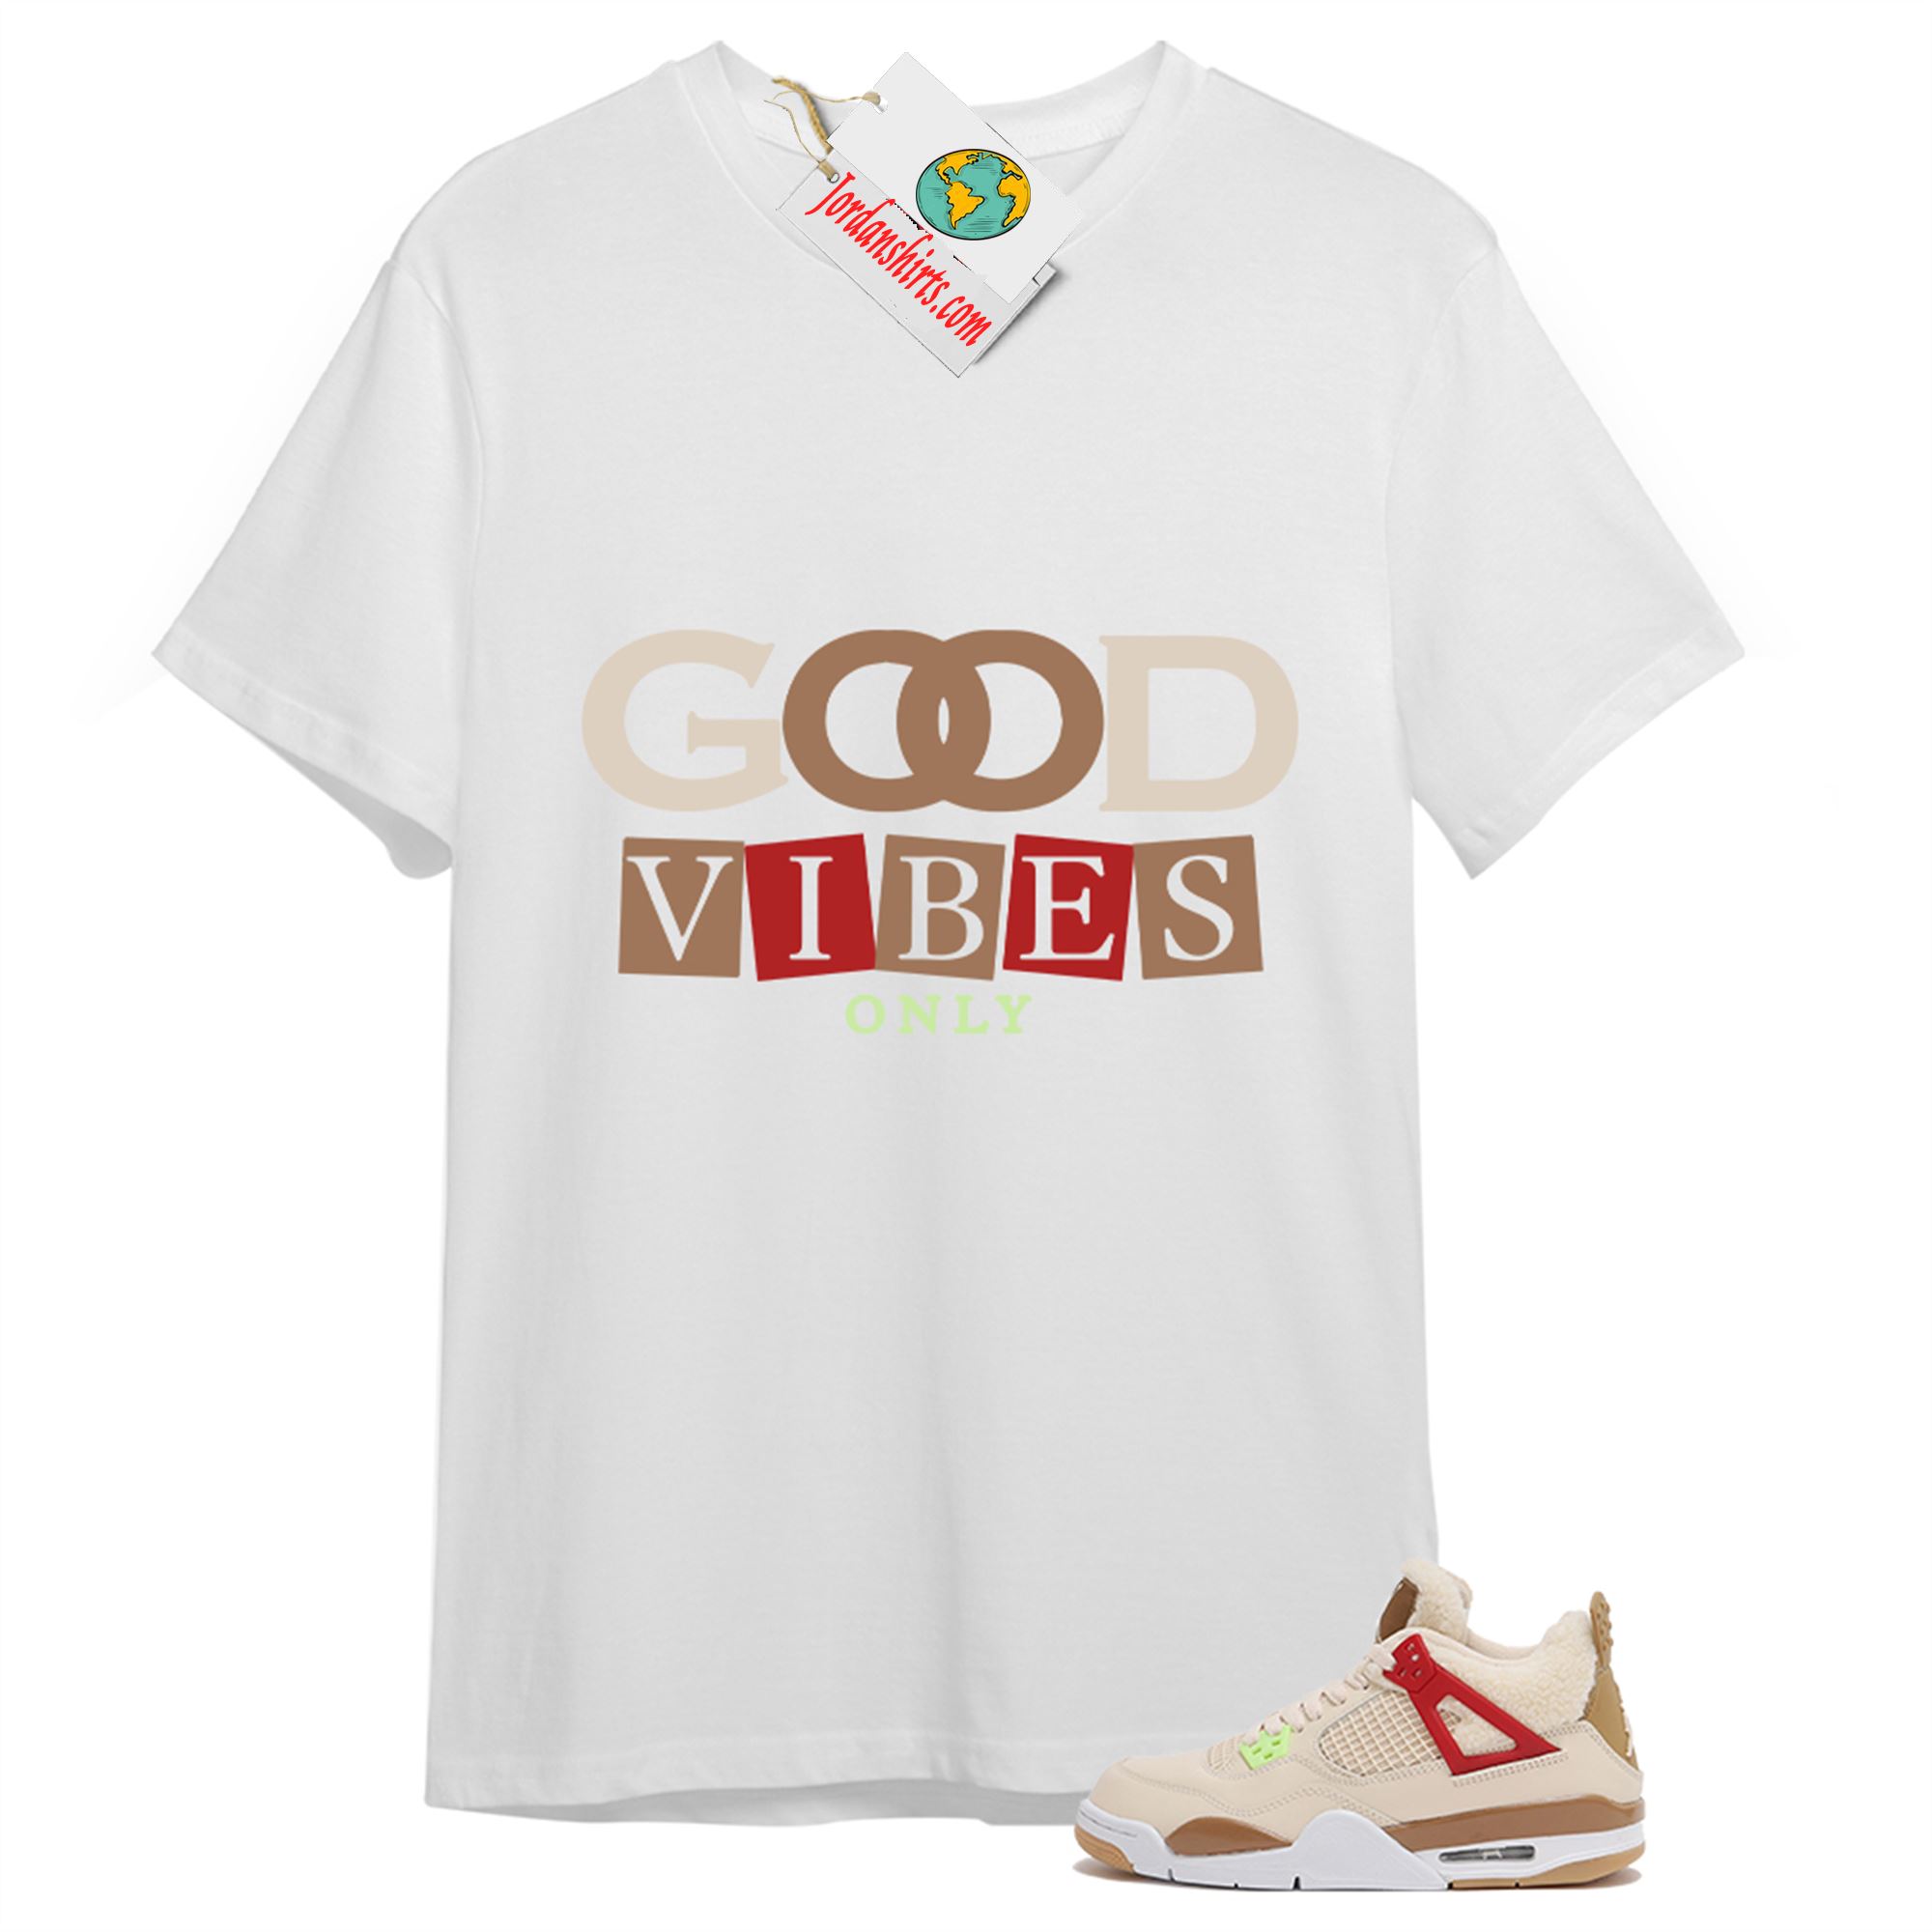 Jordan 4 Shirt, Good Vibes Only White T-shirt Air Jordan 4 Wild Things 4s Plus Size Up To 5xl